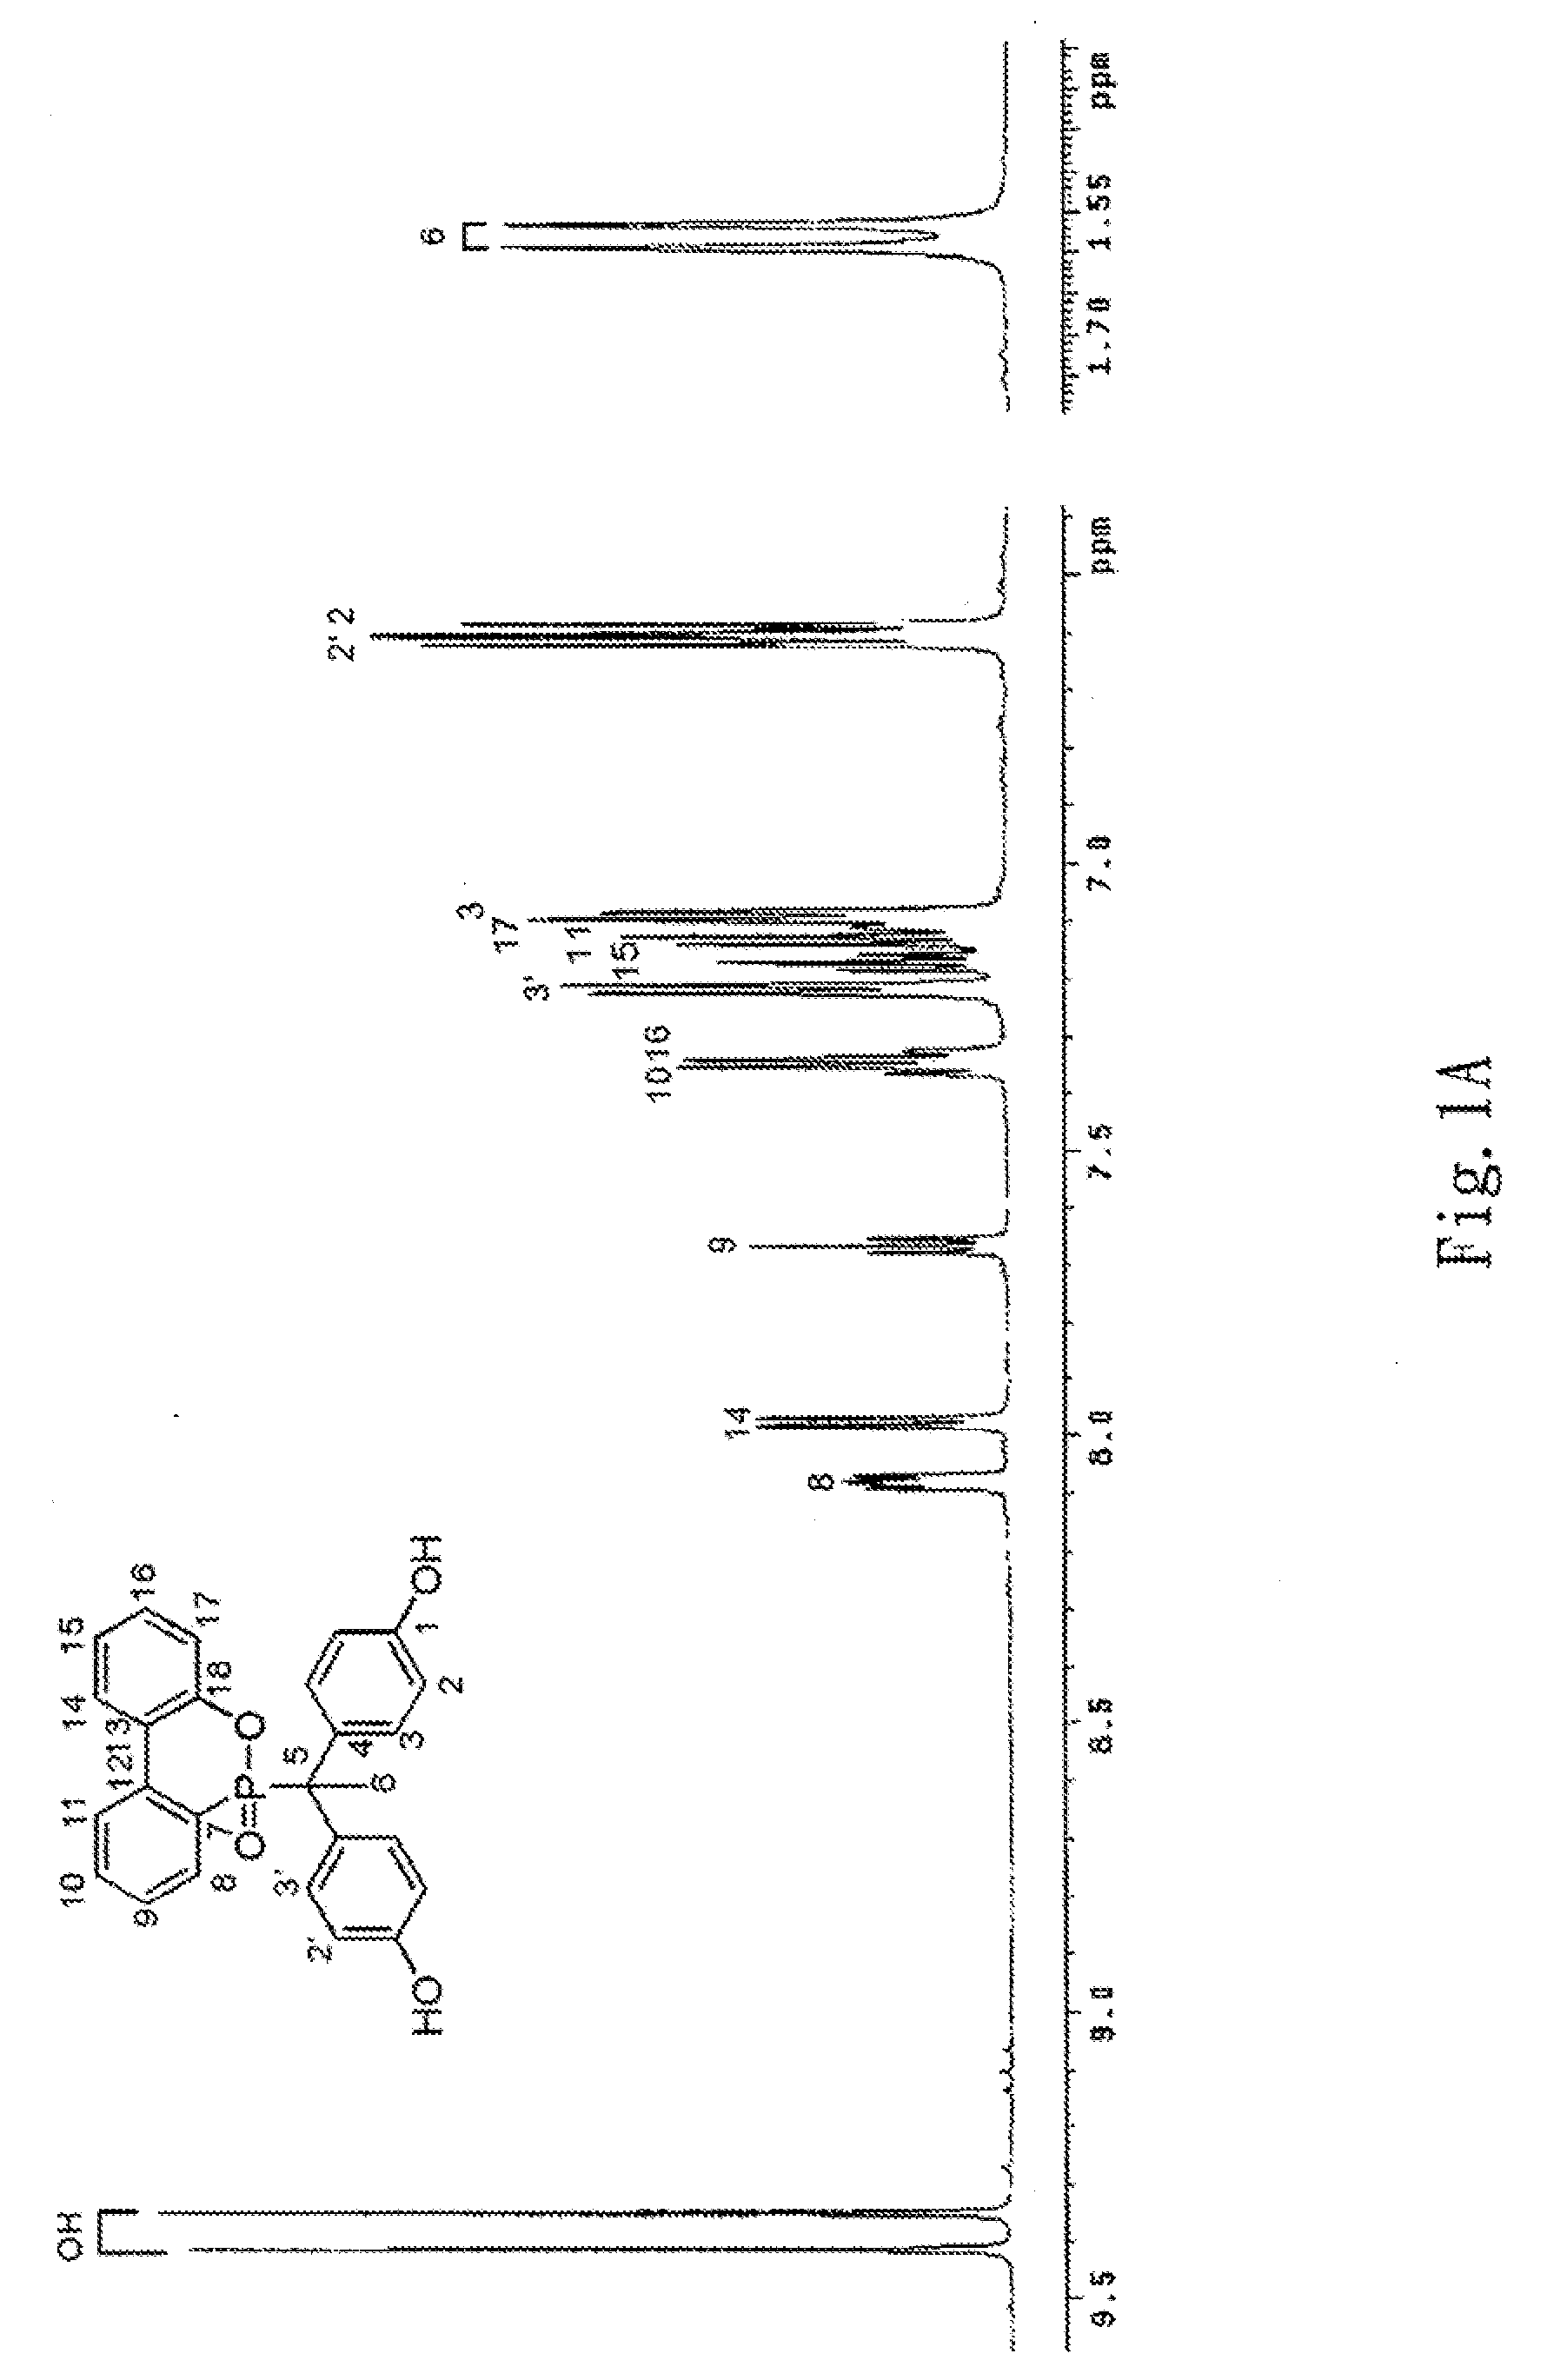 Phosphorus-containing bisphenols and preparing method thereof